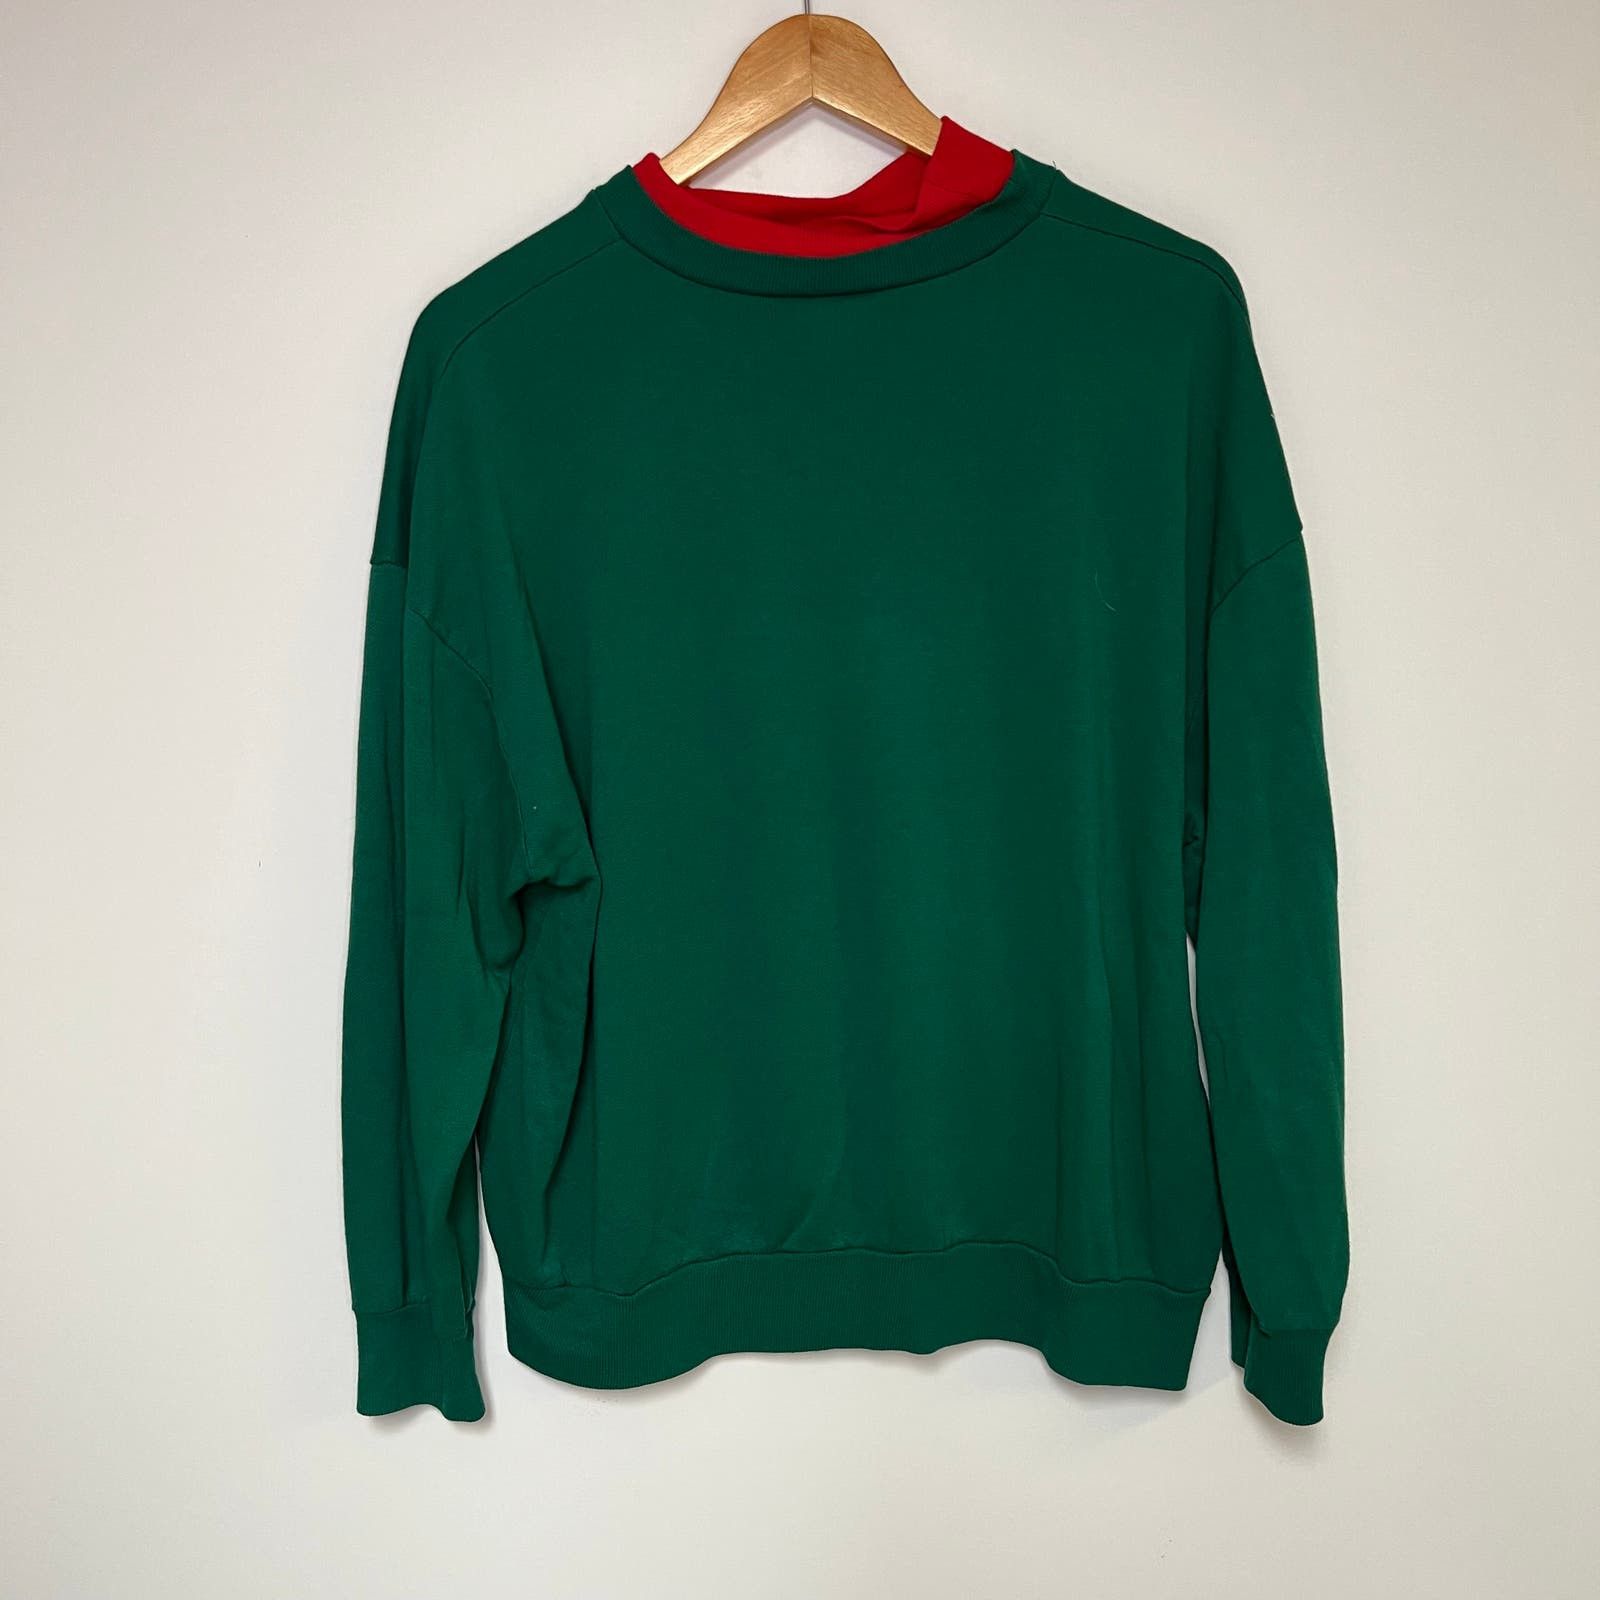 Vintage Vintage Cat Sweatshirt Dog Sweater Kitty Puppy Green 90s Size US XL / EU 56 / 4 - 2 Preview